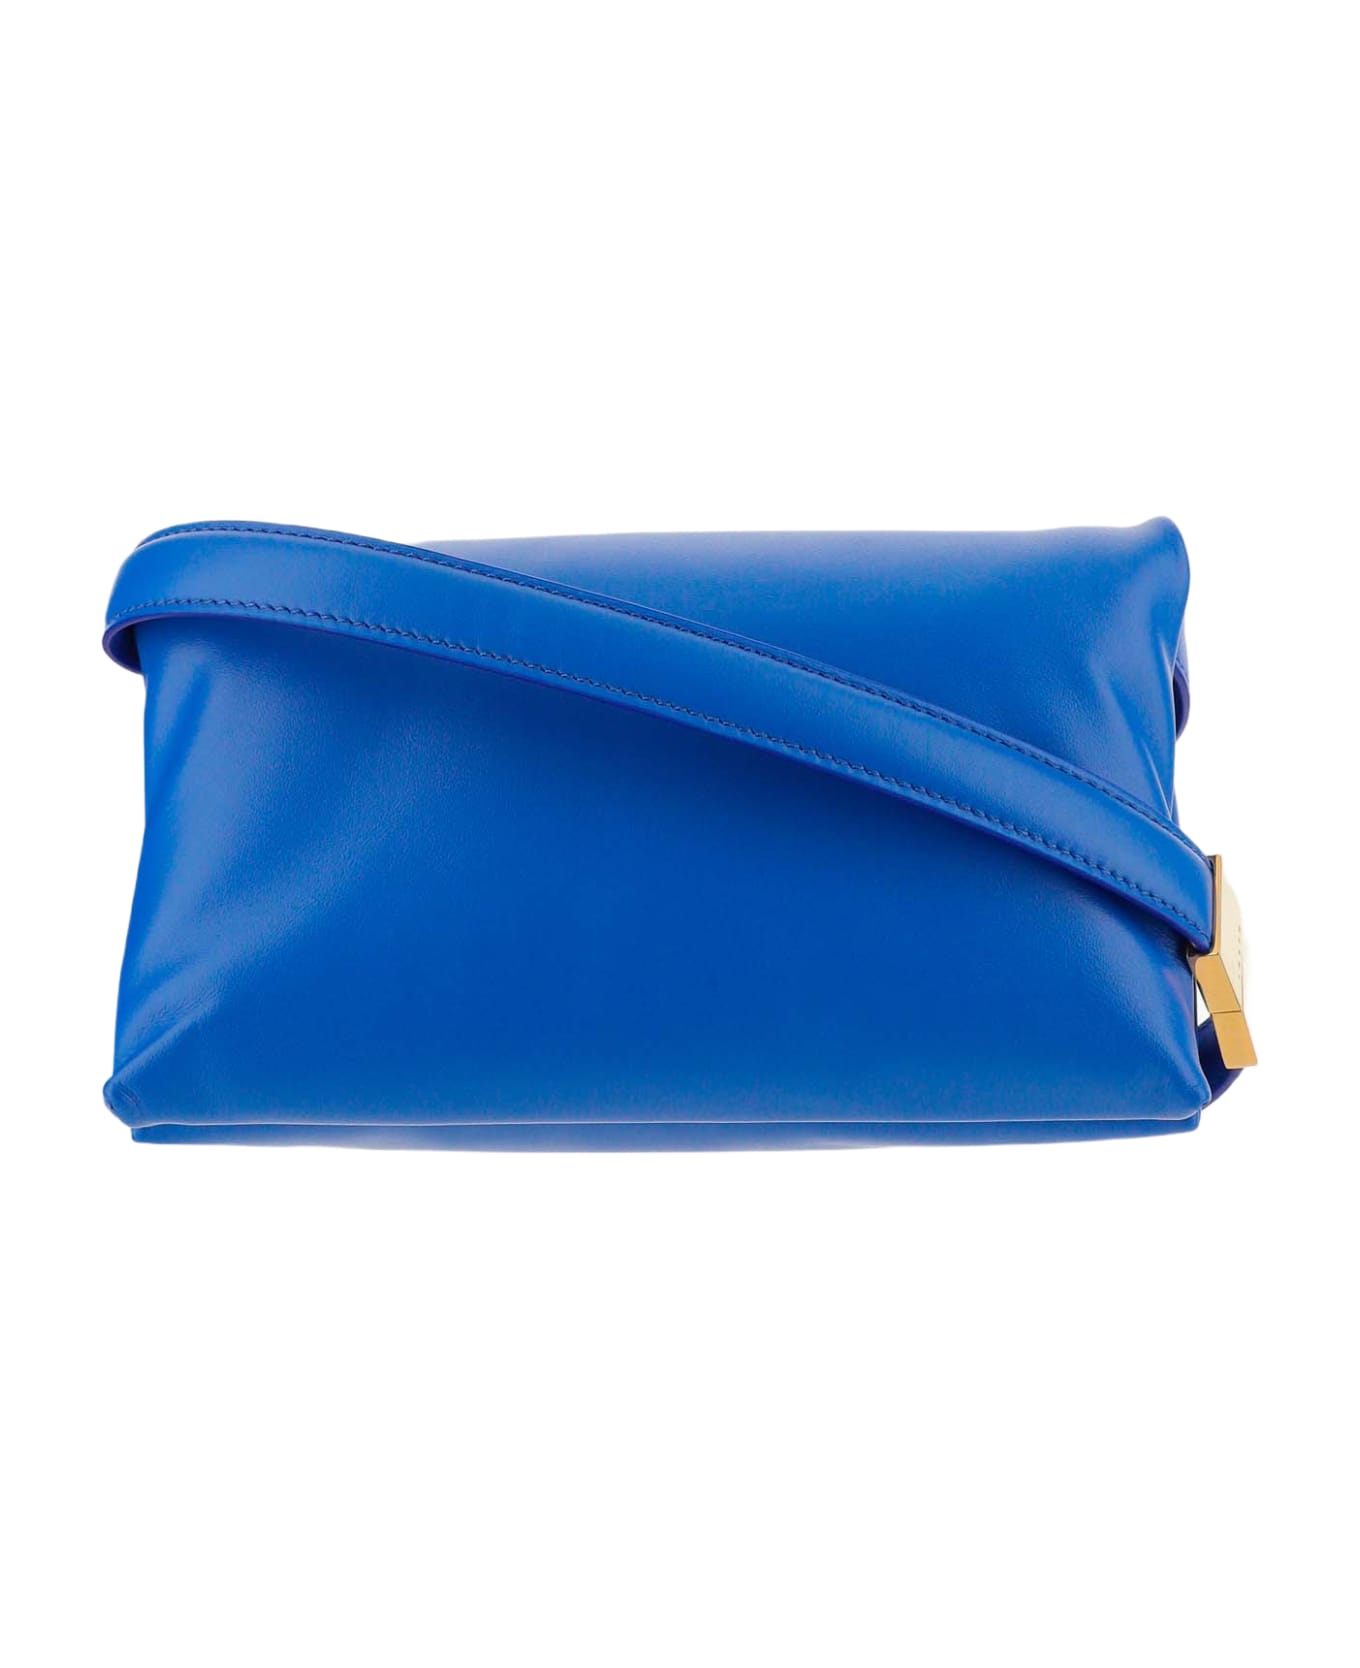 Marni Blue Calfskin Prisma Bag - Blue